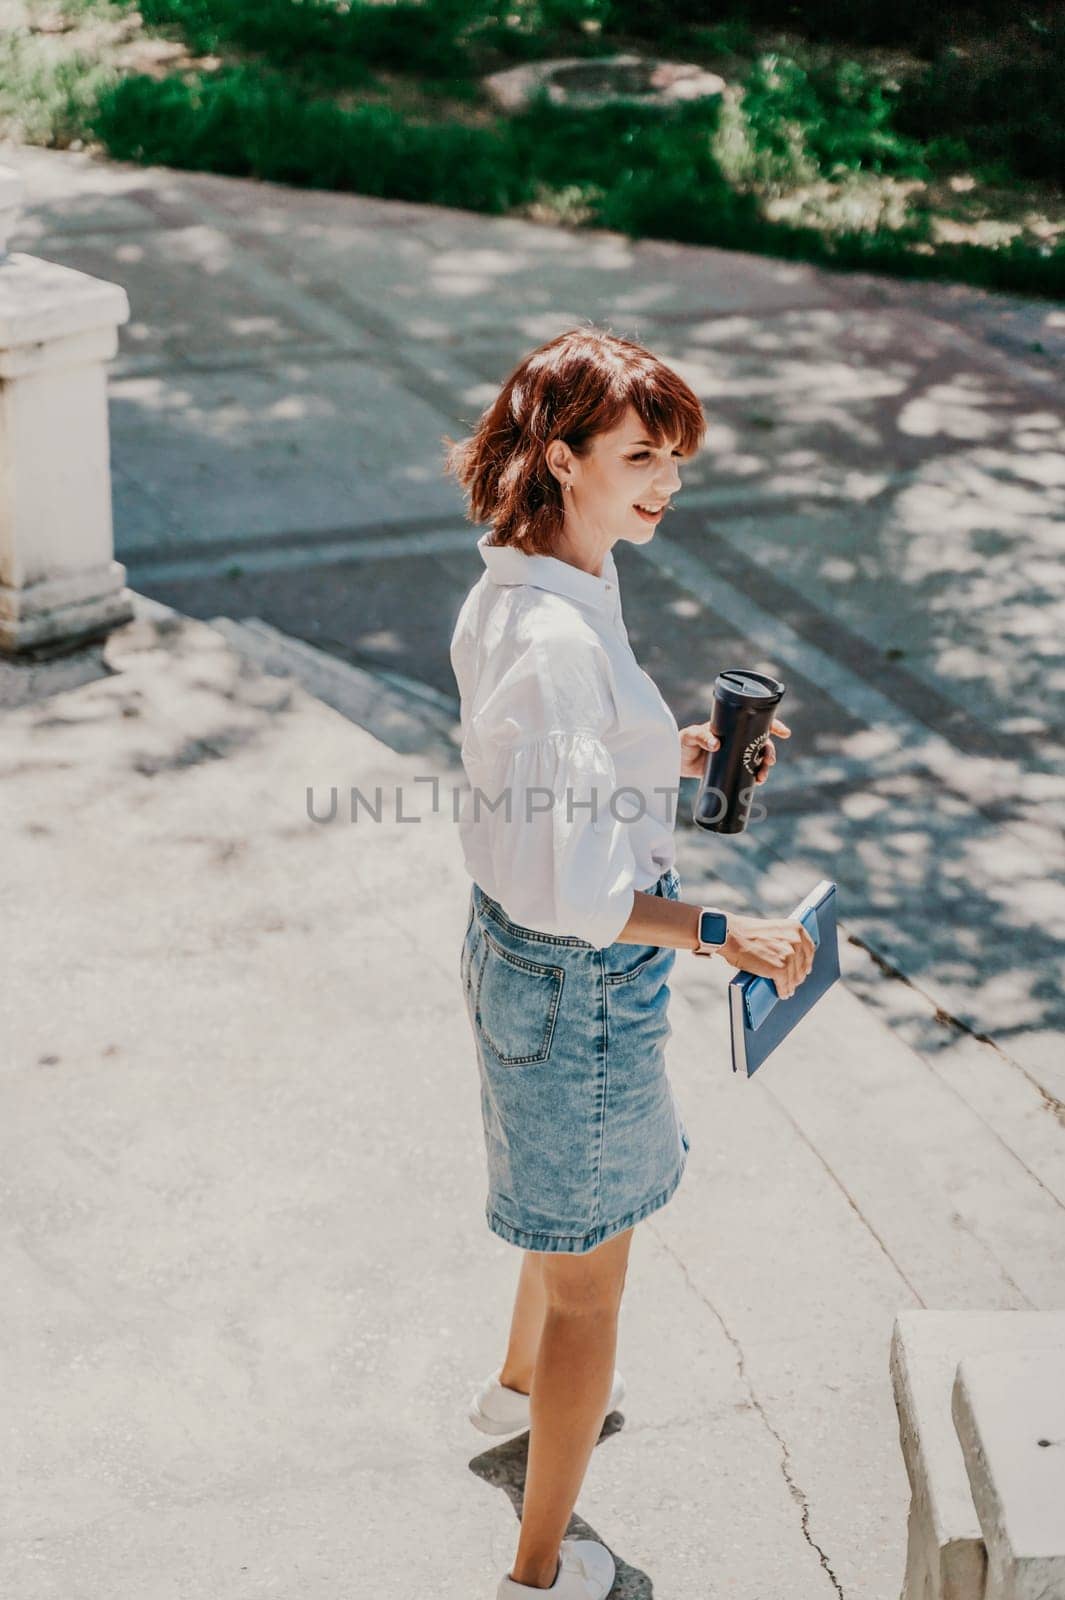 Business woman city street. A woman in a white shirt and blue denim skirt walks down the street holding a blue notebook in her hands. Summer city walks, travel by Matiunina